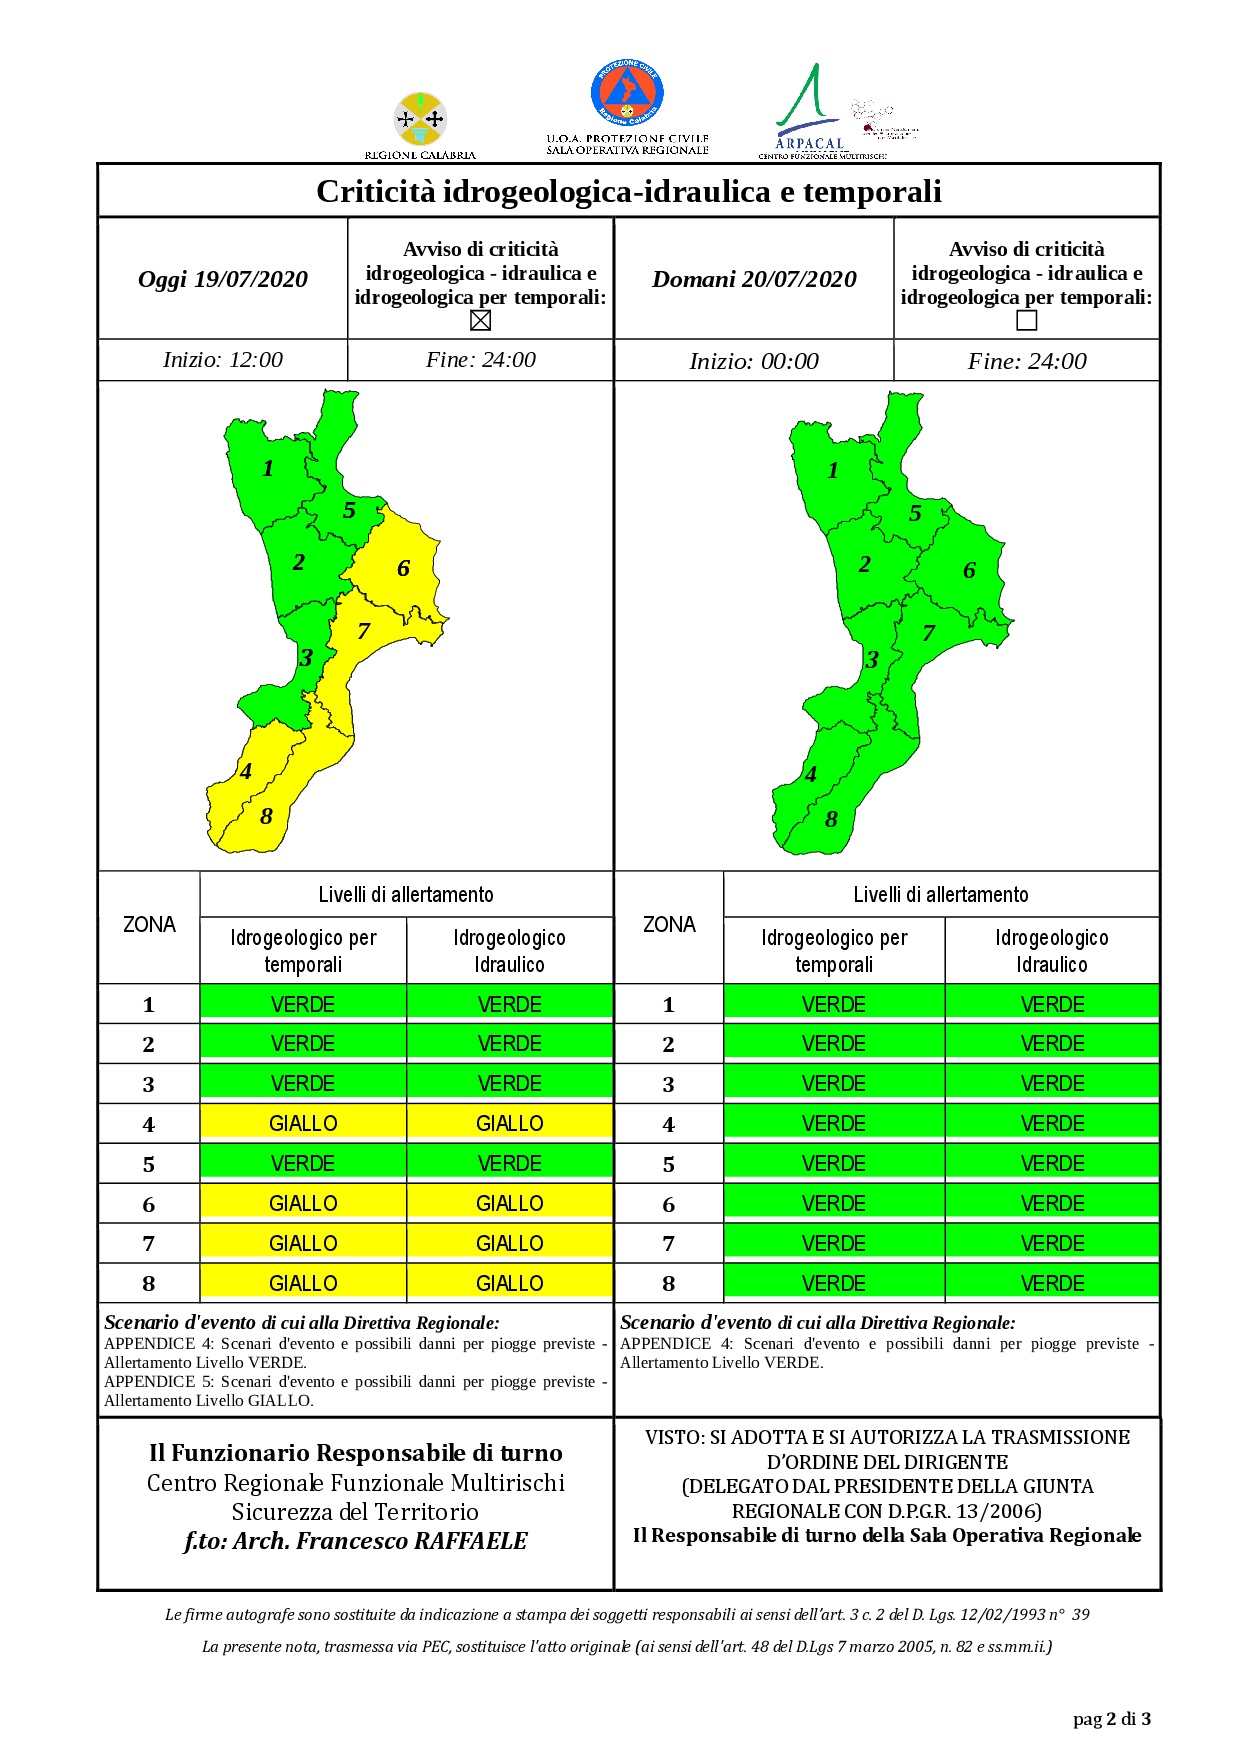 Criticità idrogeologica-idraulica e temporali in Calabria 19-07-2020